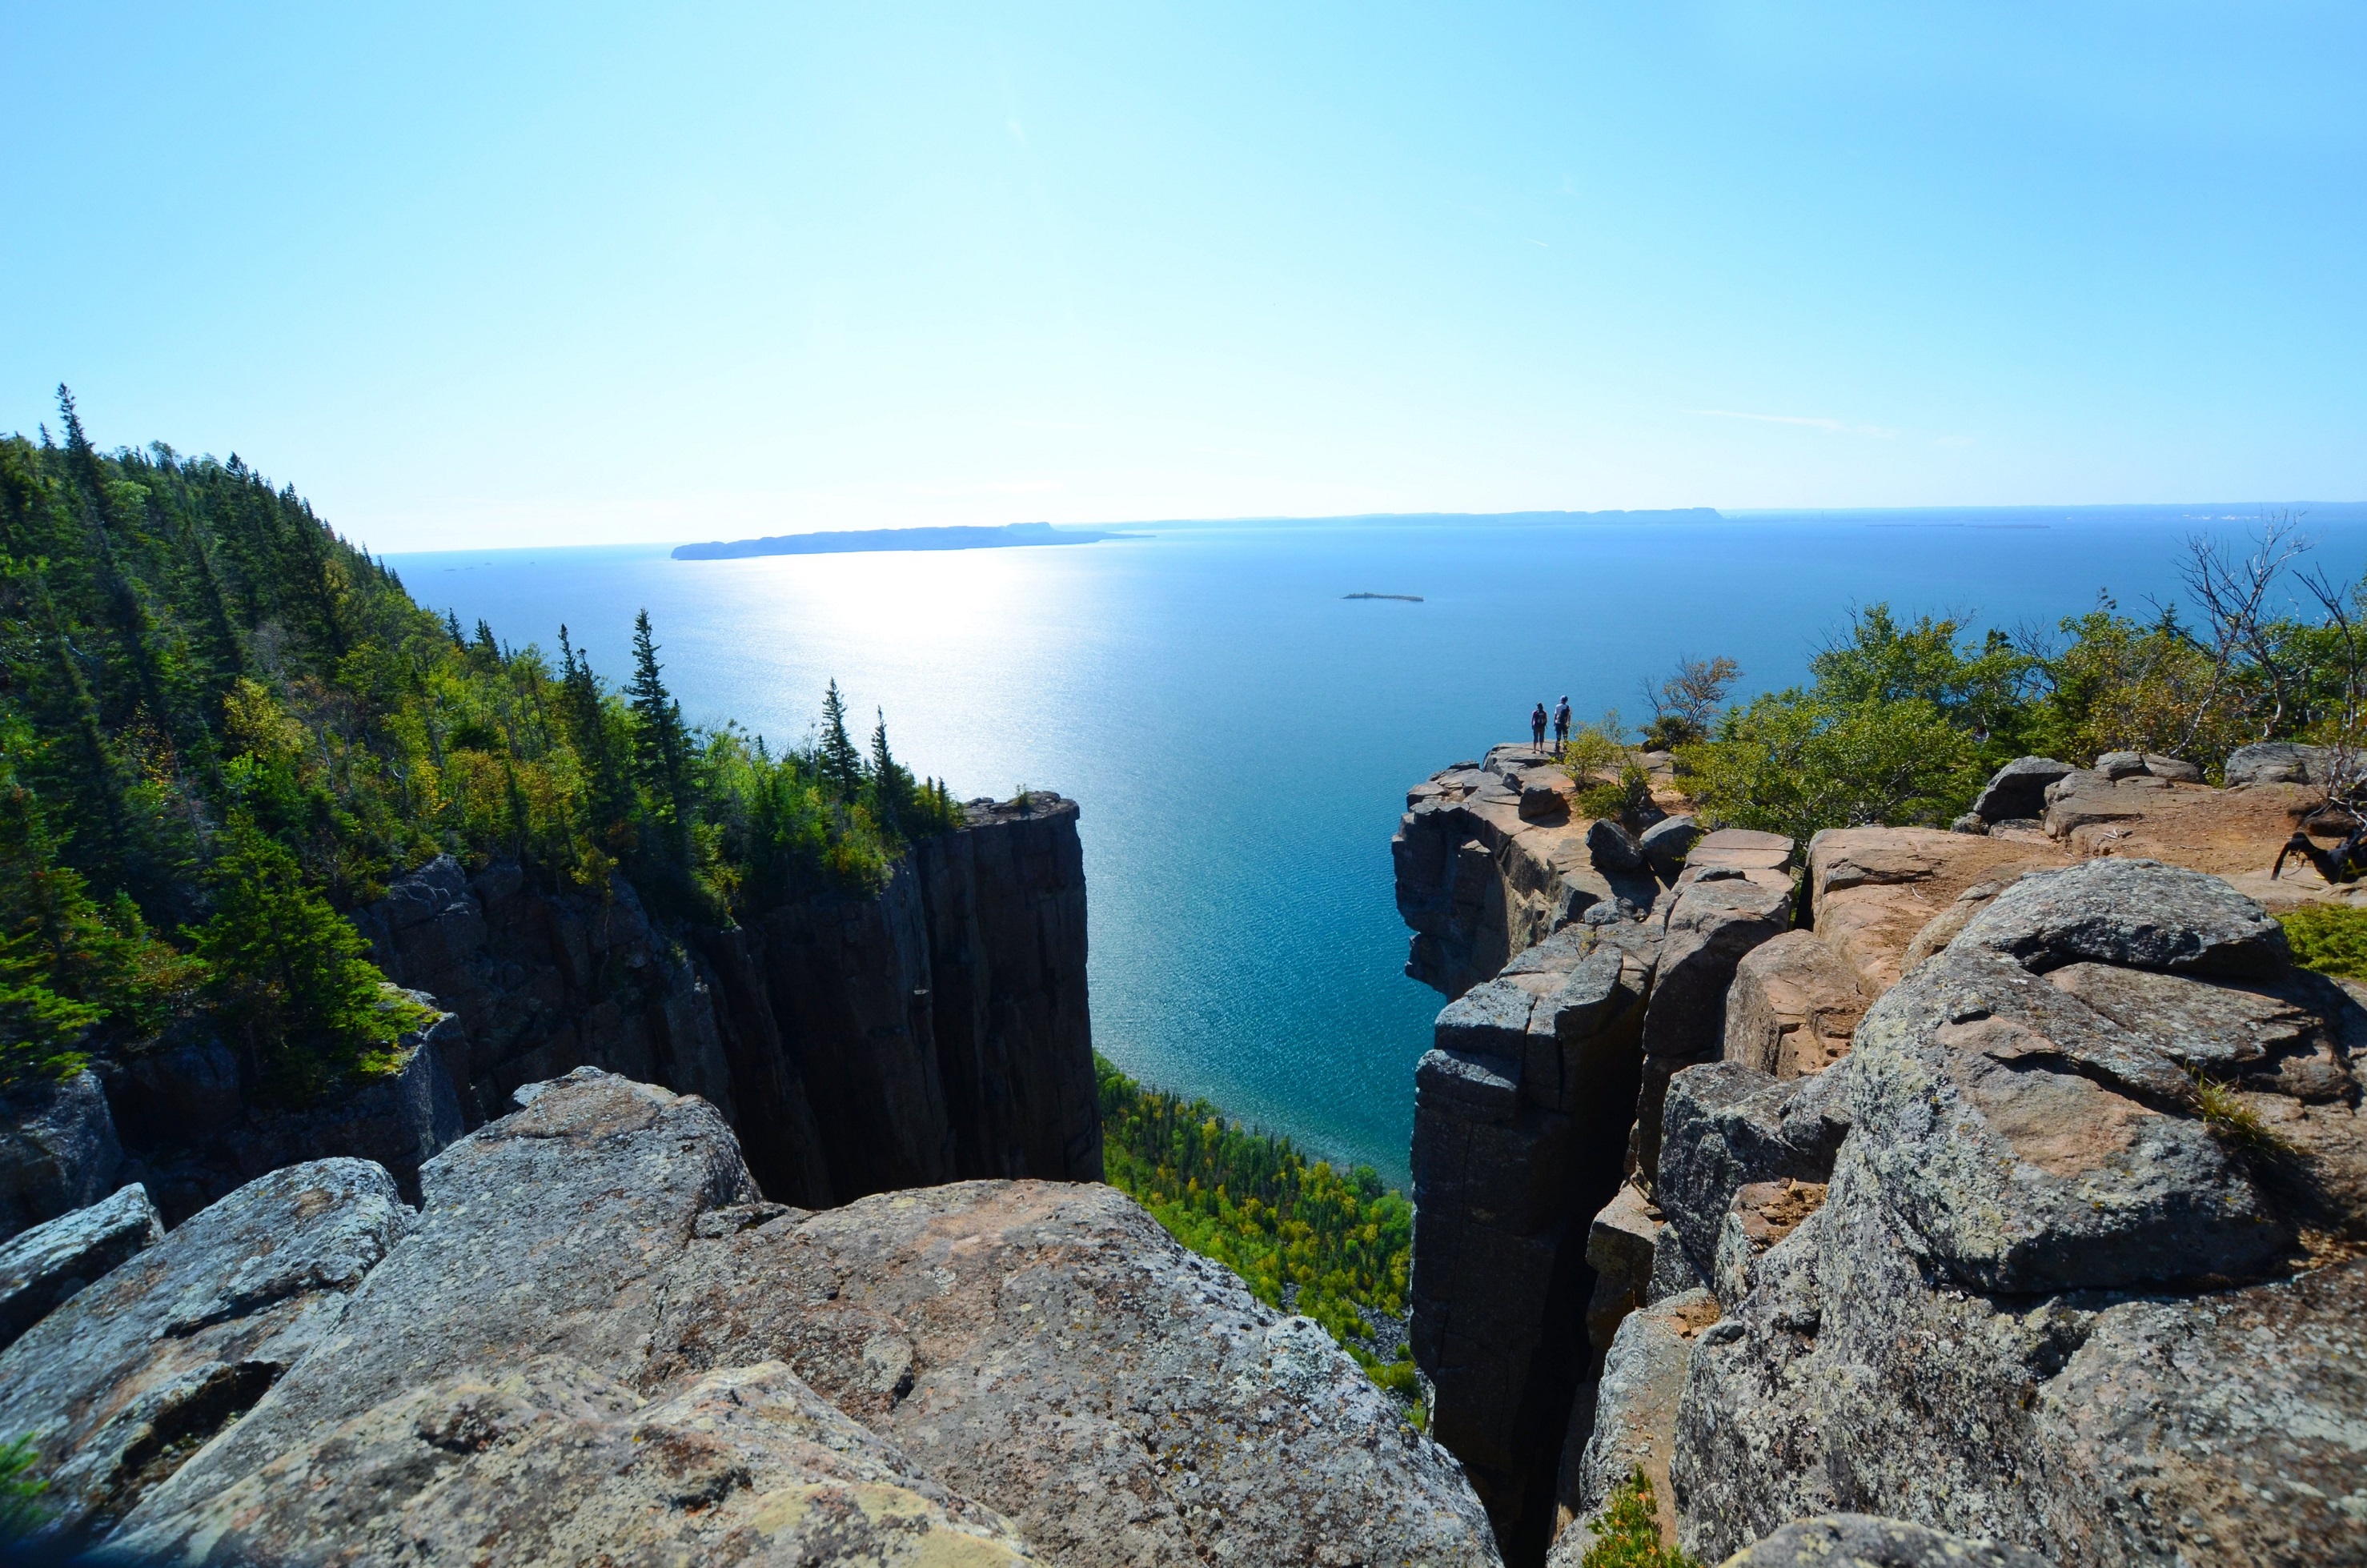 Средняя глубина озера гурон. Верхнее озеро (Lake Superior). Канада. Великие американские озёра верхнее Гурон Мичиган Эри Онтарио. Великие озёра Северной Америки озероонтарио. Озеро Супериор.